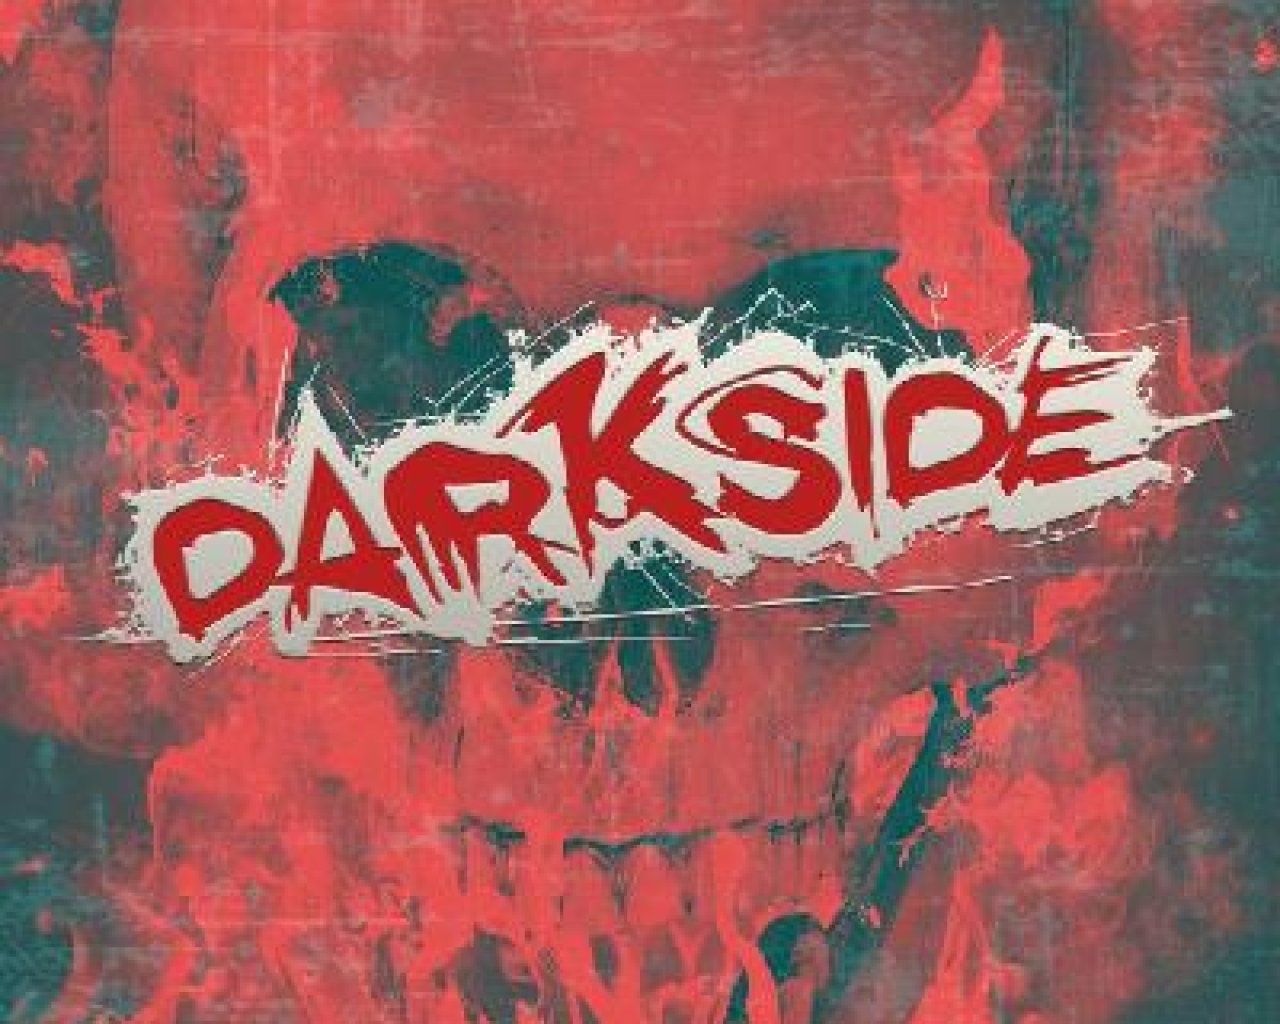 Darkside Hardcore